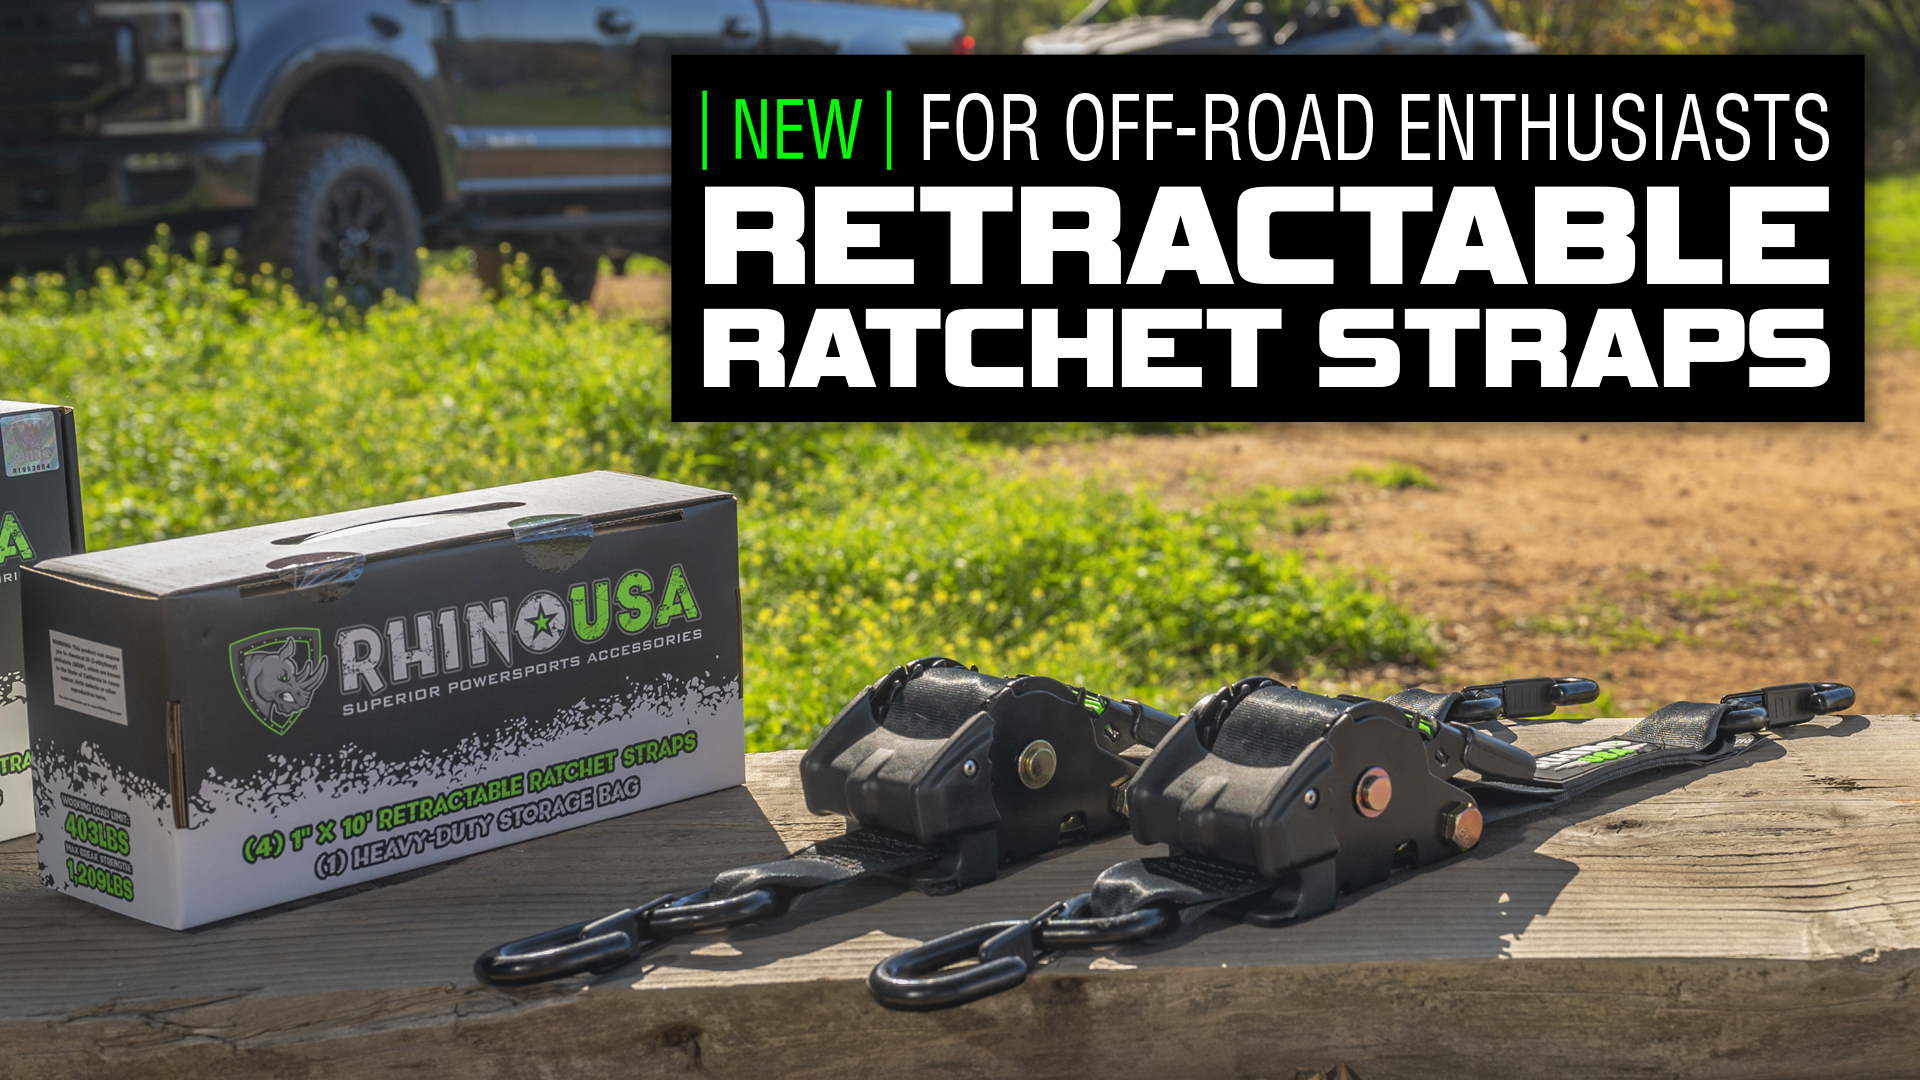 rhino usa retactible ratchet straps graphic card